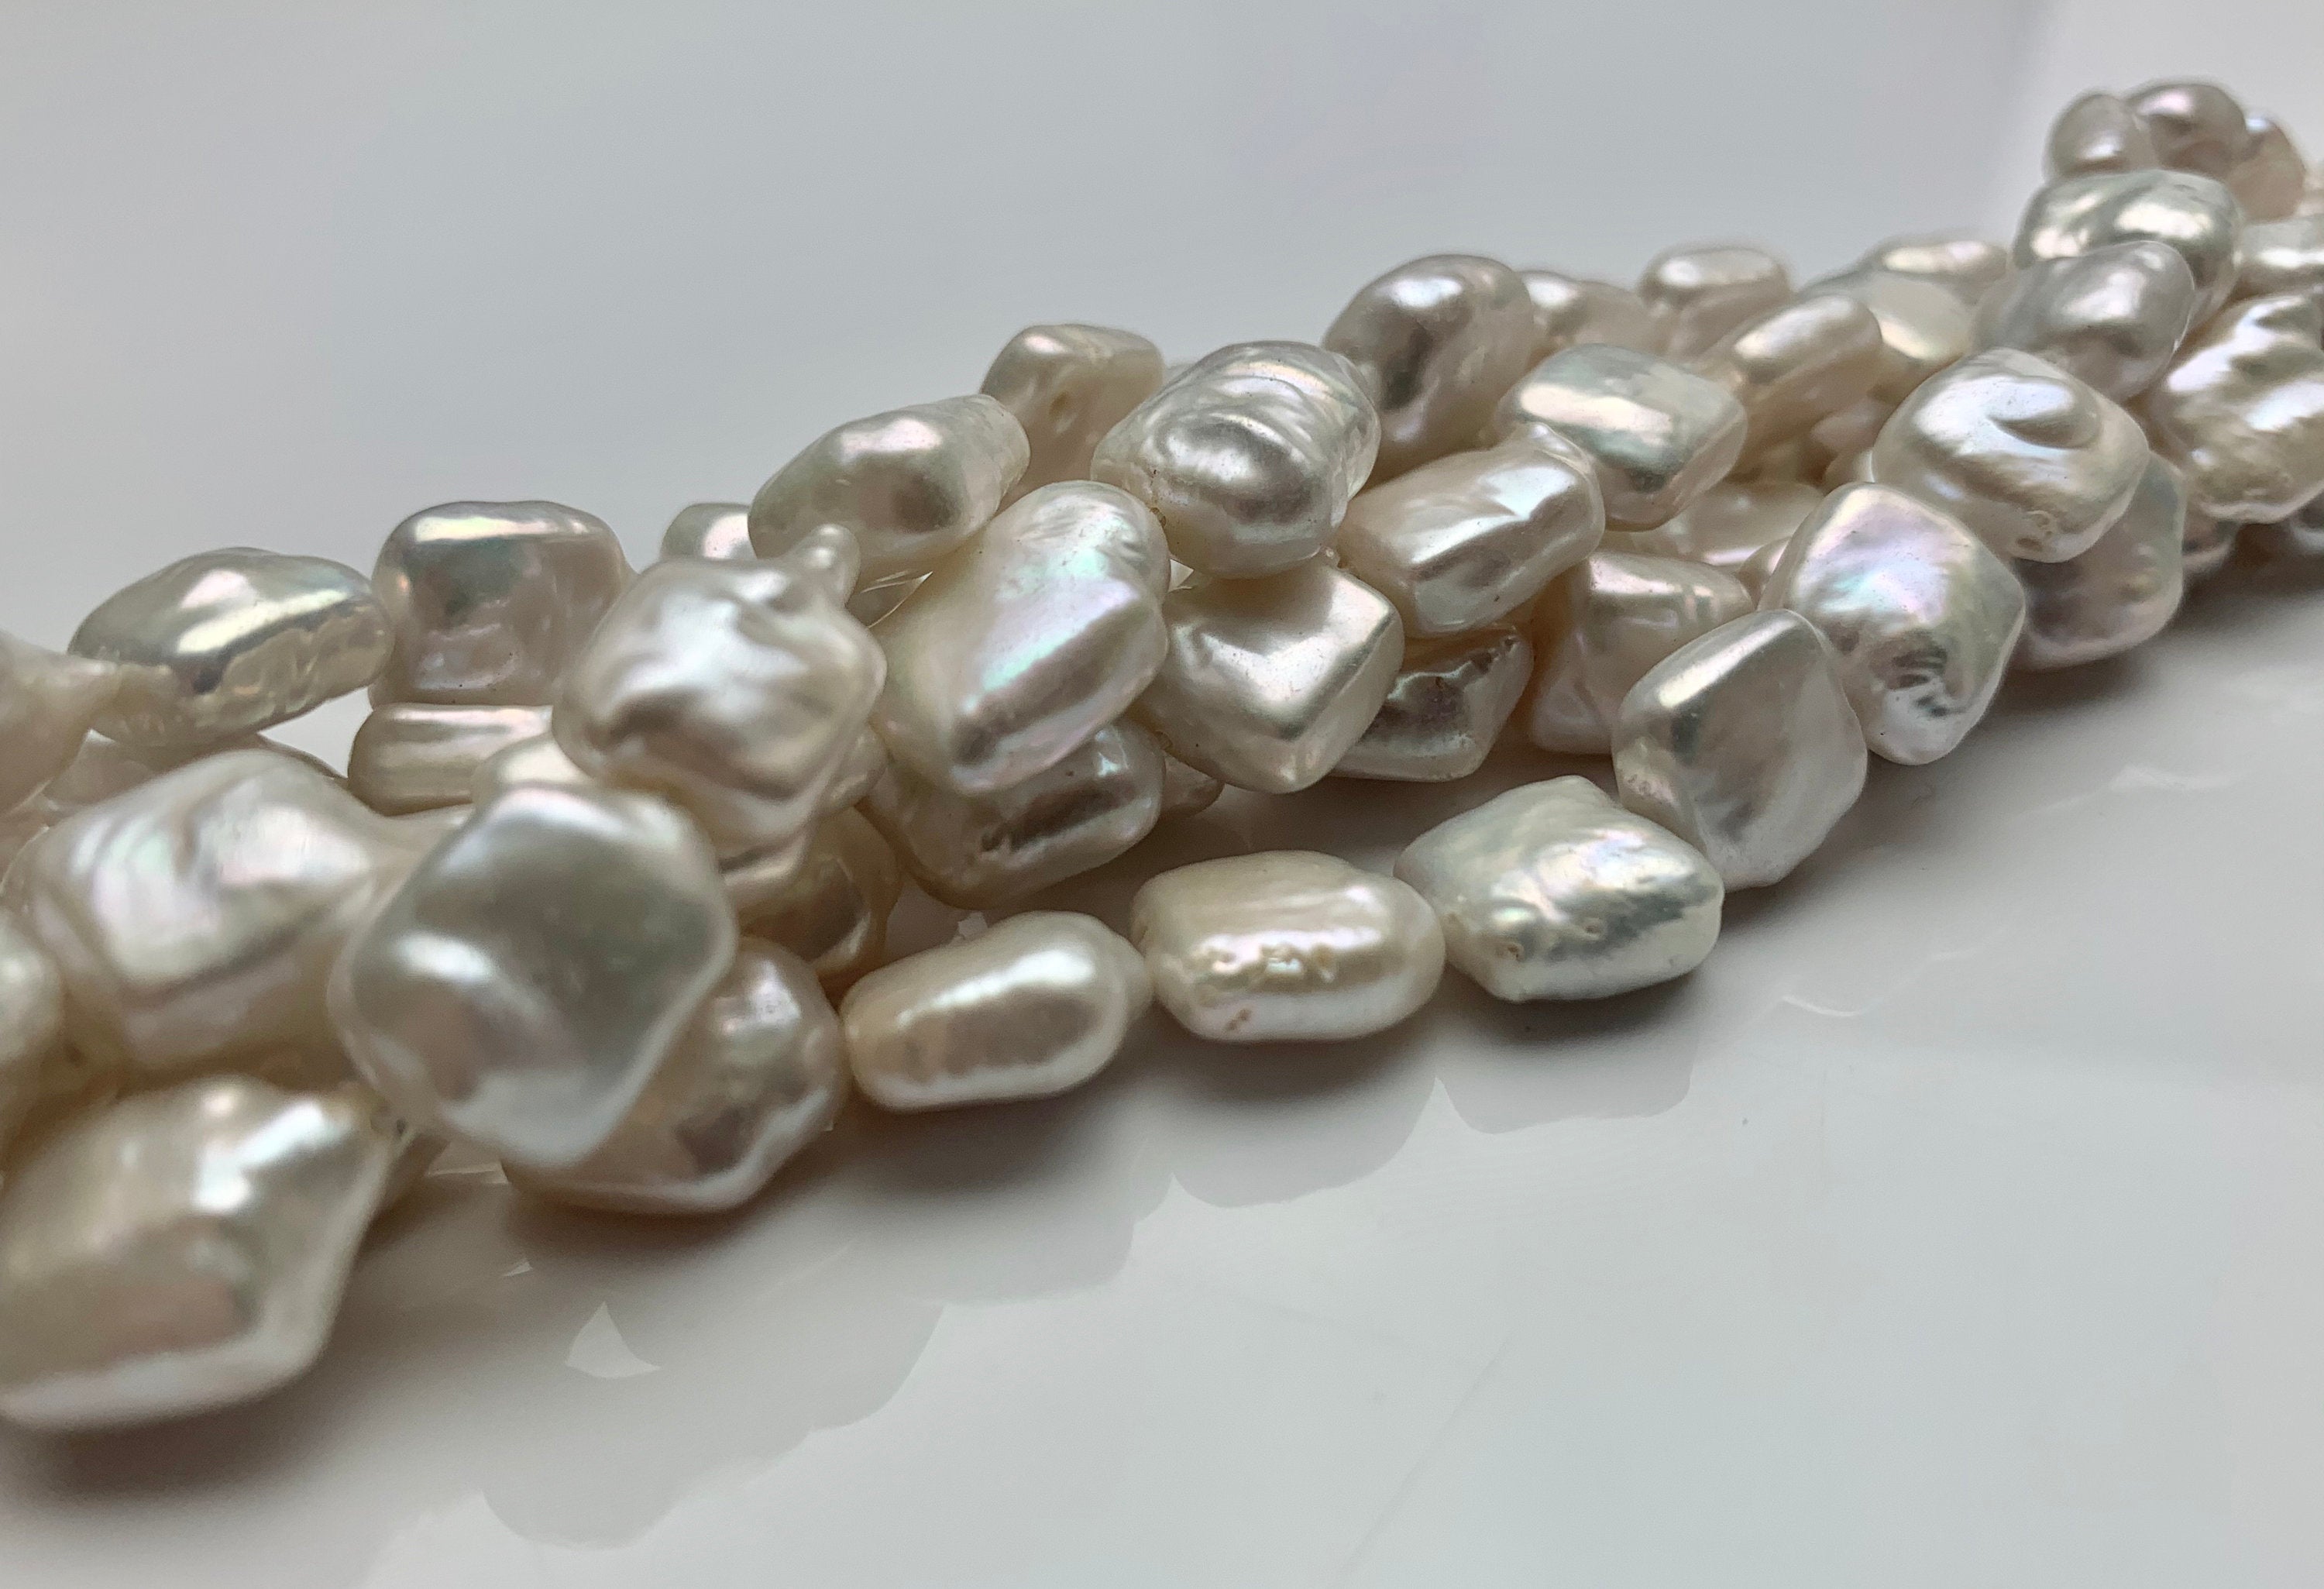  Natural Colorful Freshwater Pearl Beads Irregular